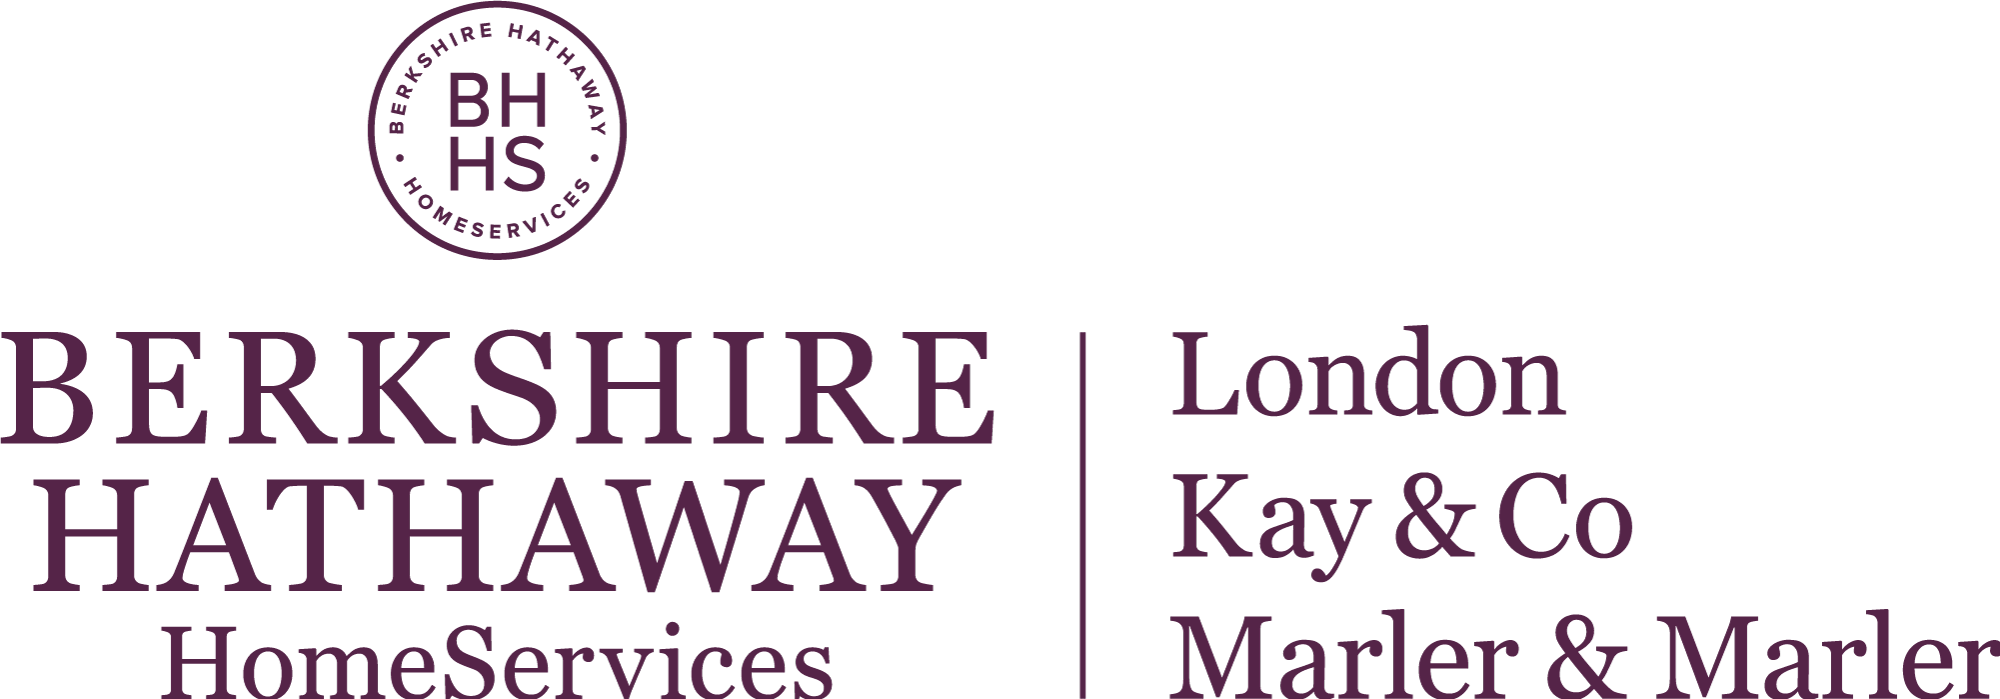 Knightsbridge Estate Agents - Berkshire Hathaway HomeServices London Marler & Marler logo